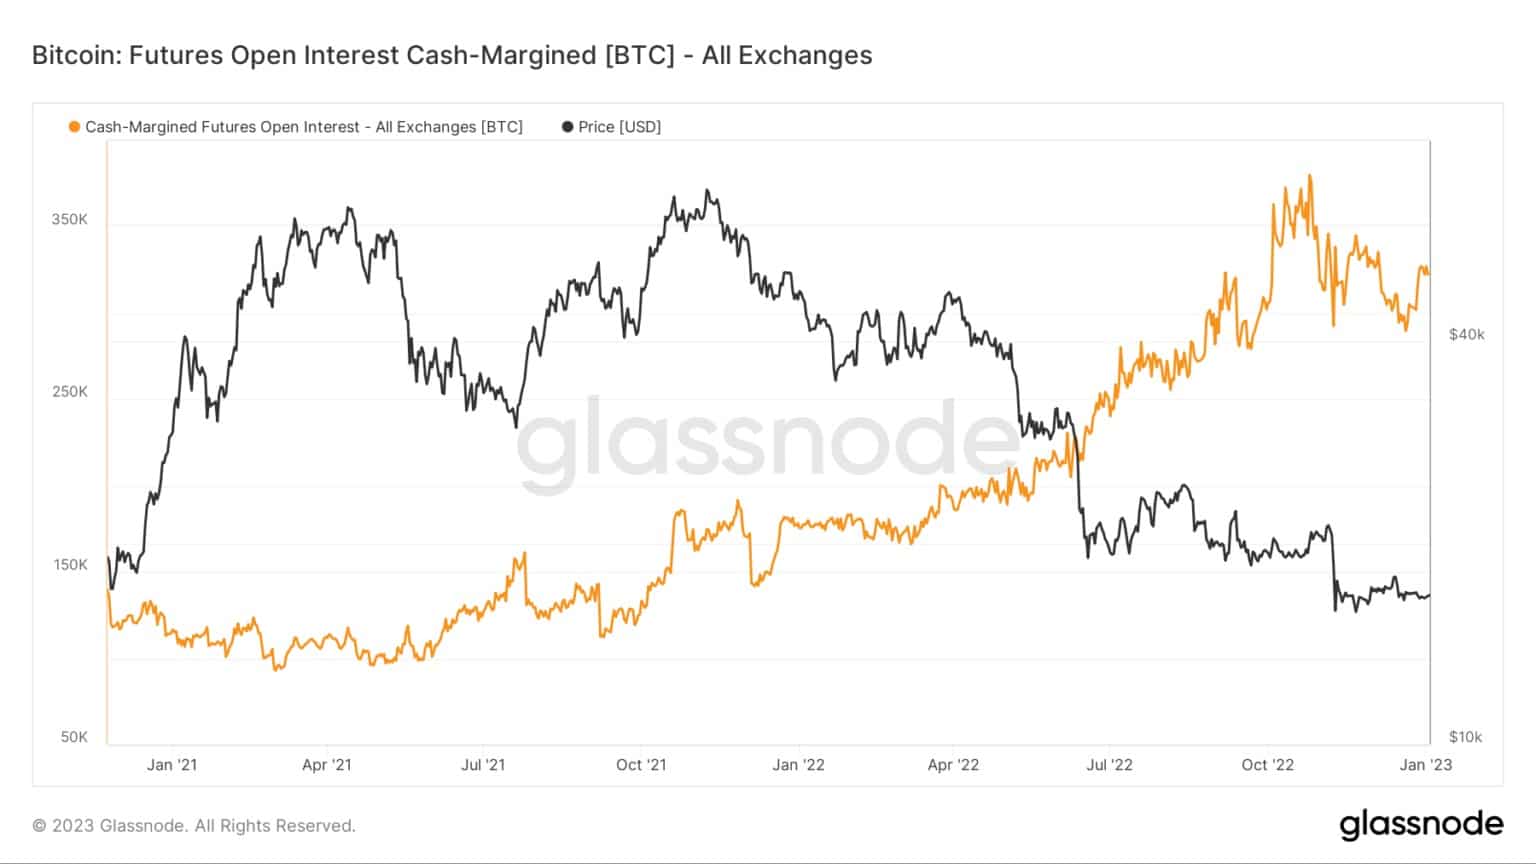 Bitcoin: Futures Open Interest Cash-Margined [BTC] - Source: Glassnode